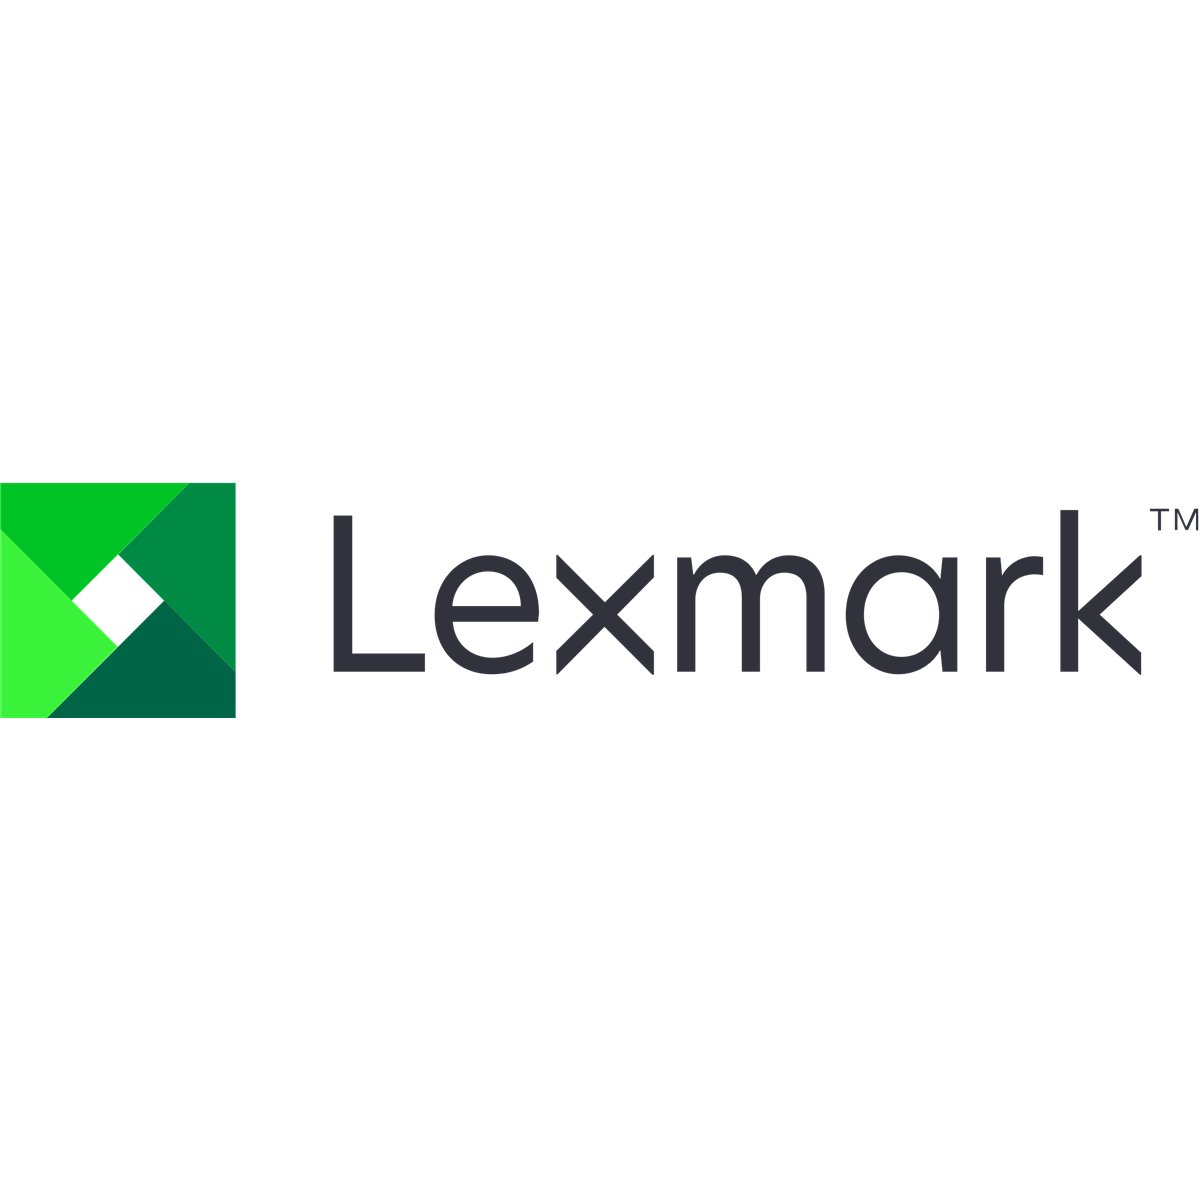 Lexmark Board 7" Control Panel